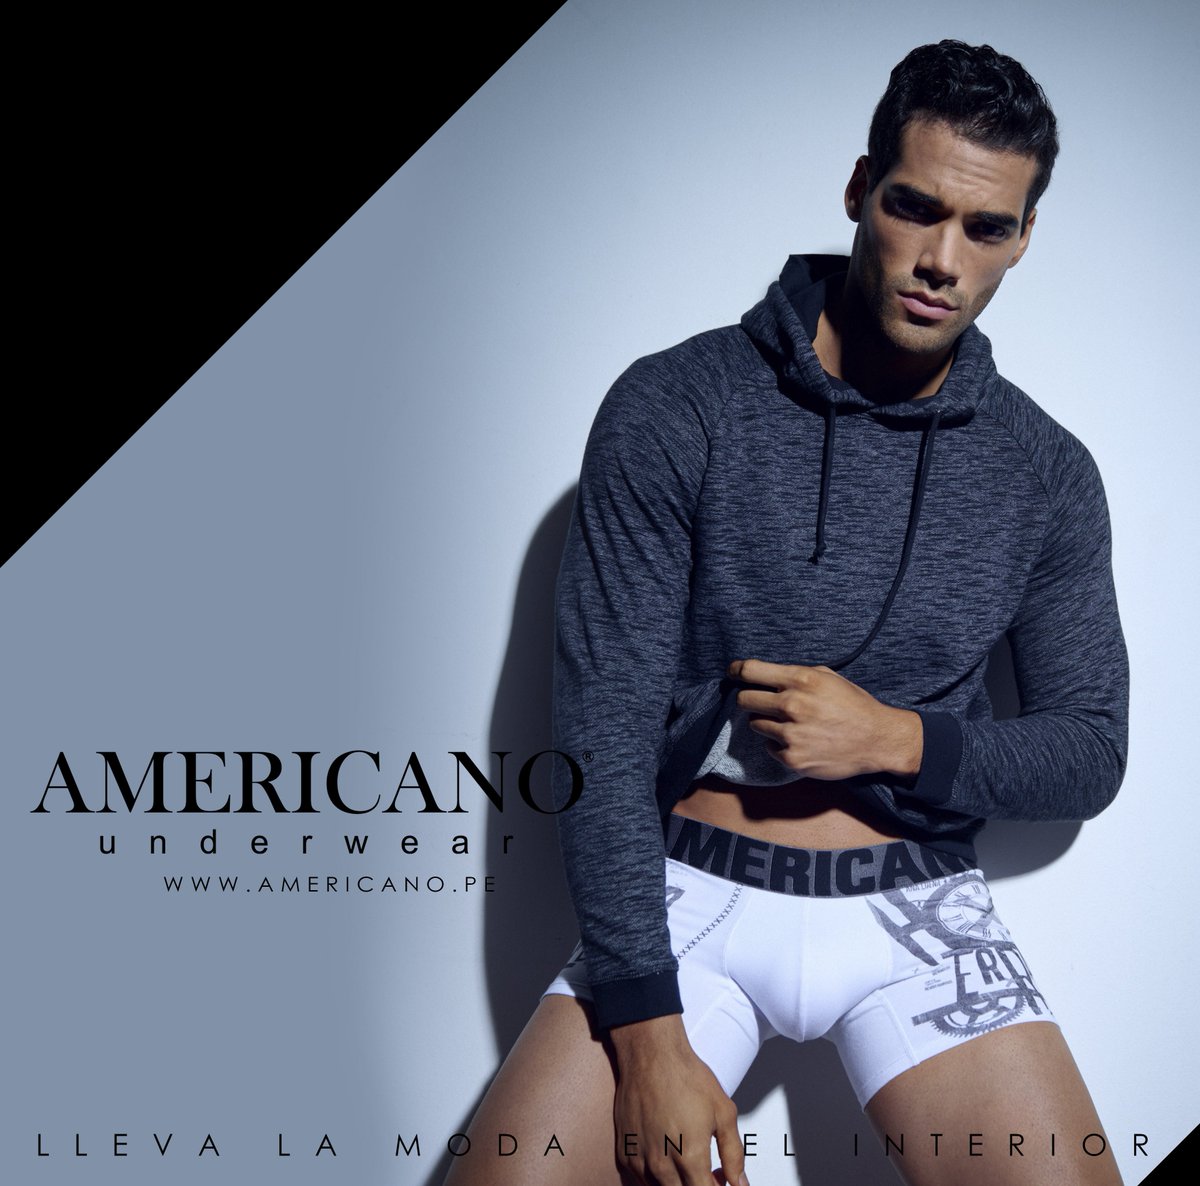 Americano Underwear on Twitter: 